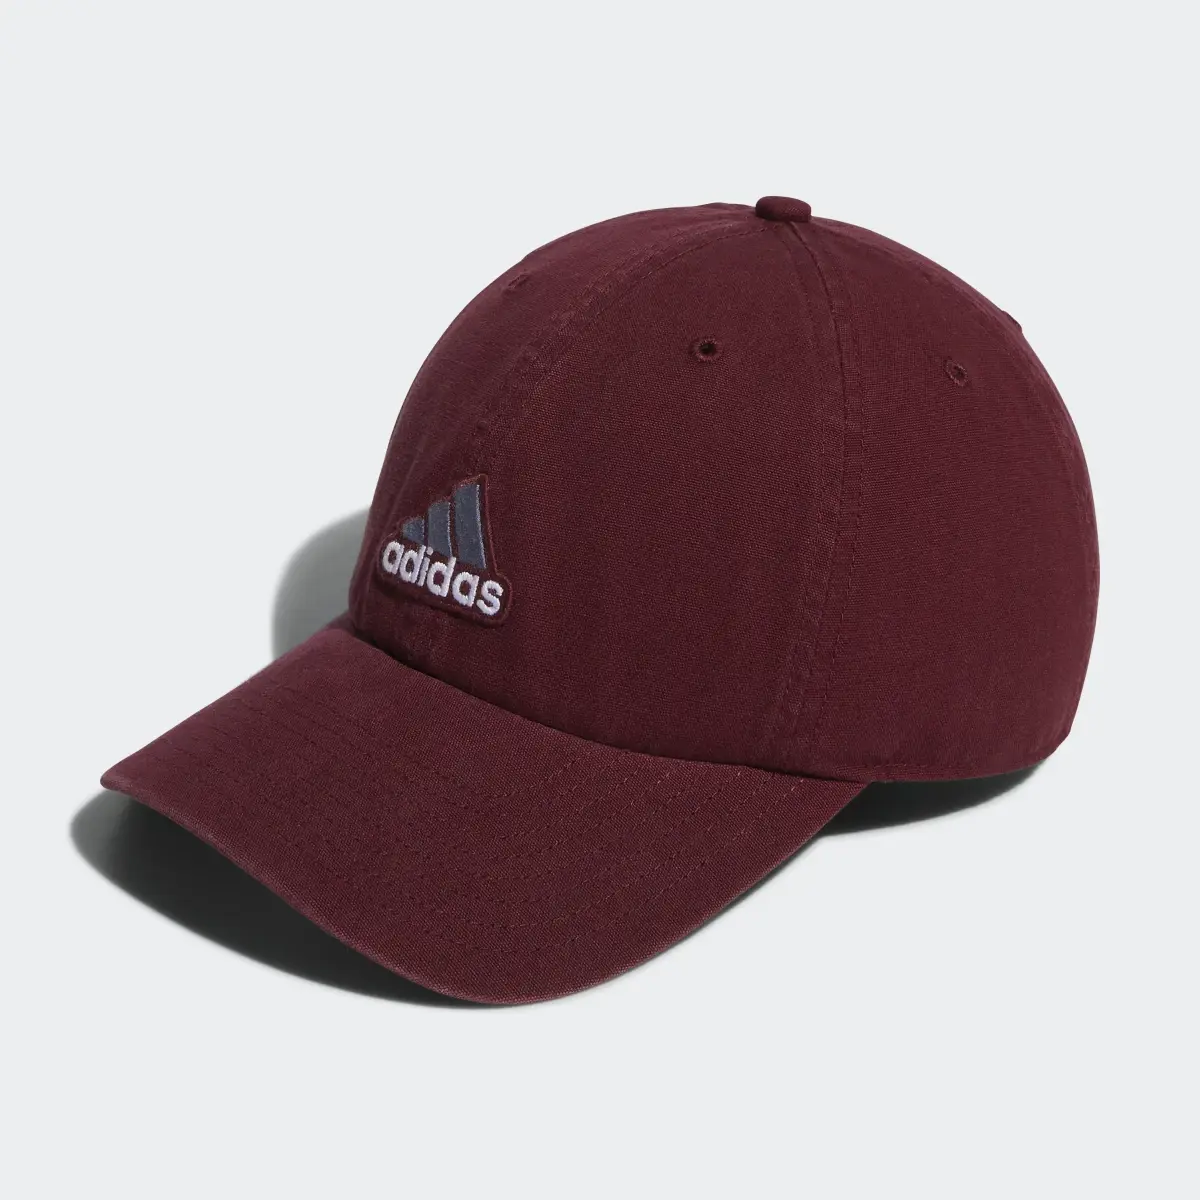 Adidas Ultimate Hat. 2